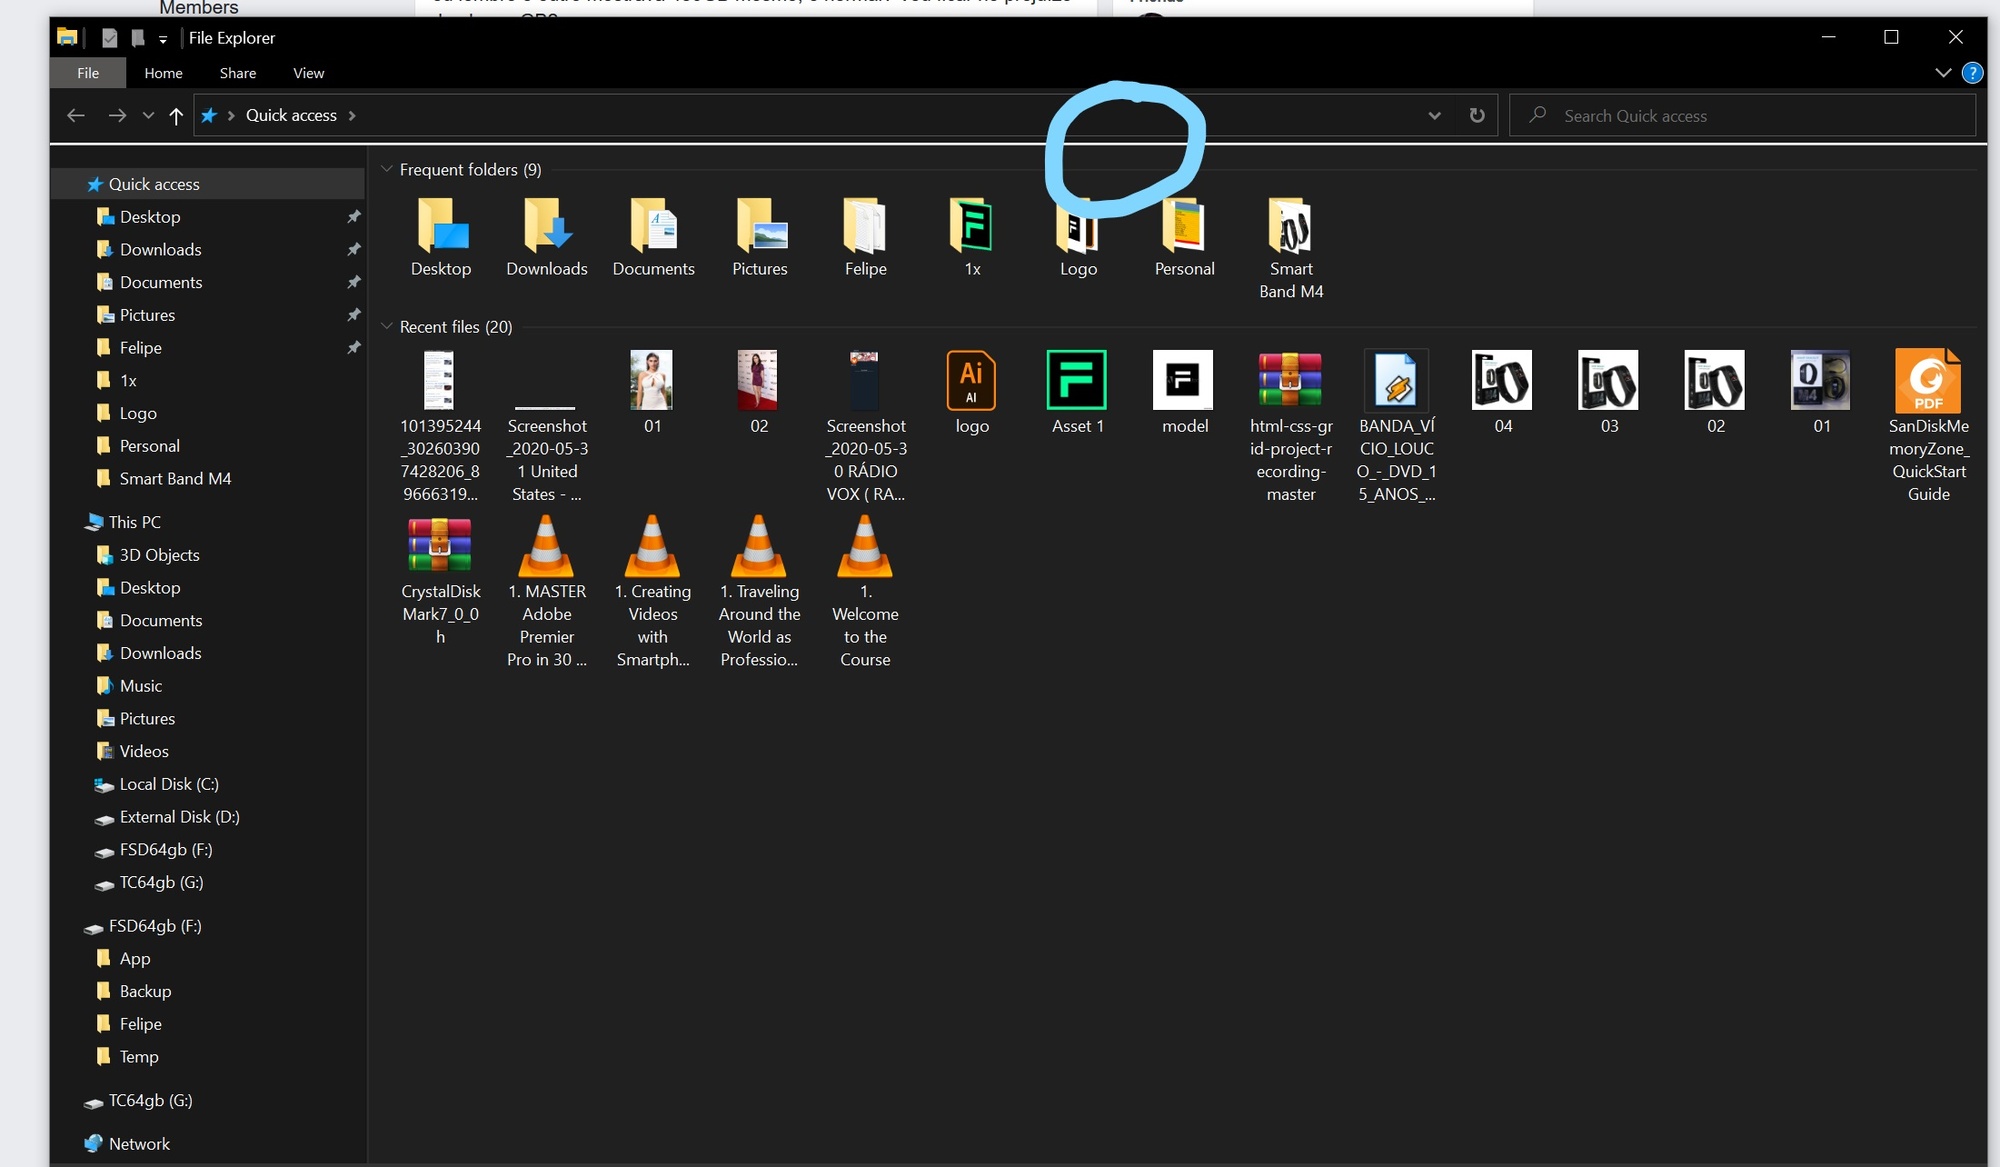 Hi, everyone. I have a problem with toolbar in folders in my Windows 10 6de534ad-17d7-40e1-8377-b1883040db95?upload=true.jpg